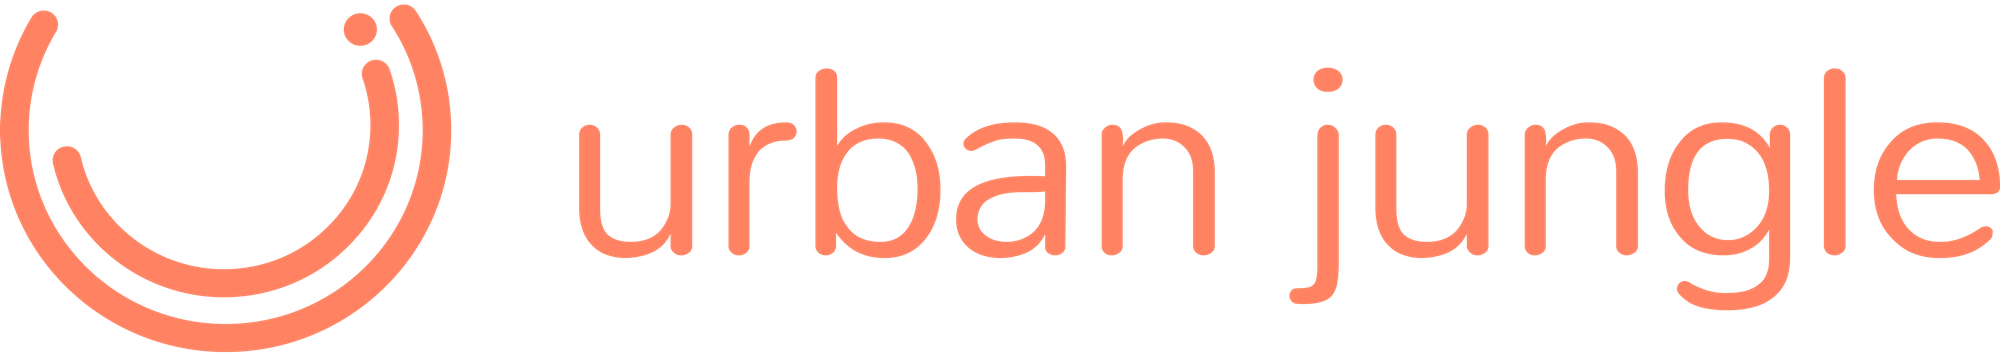 UJ-logo_orange-2